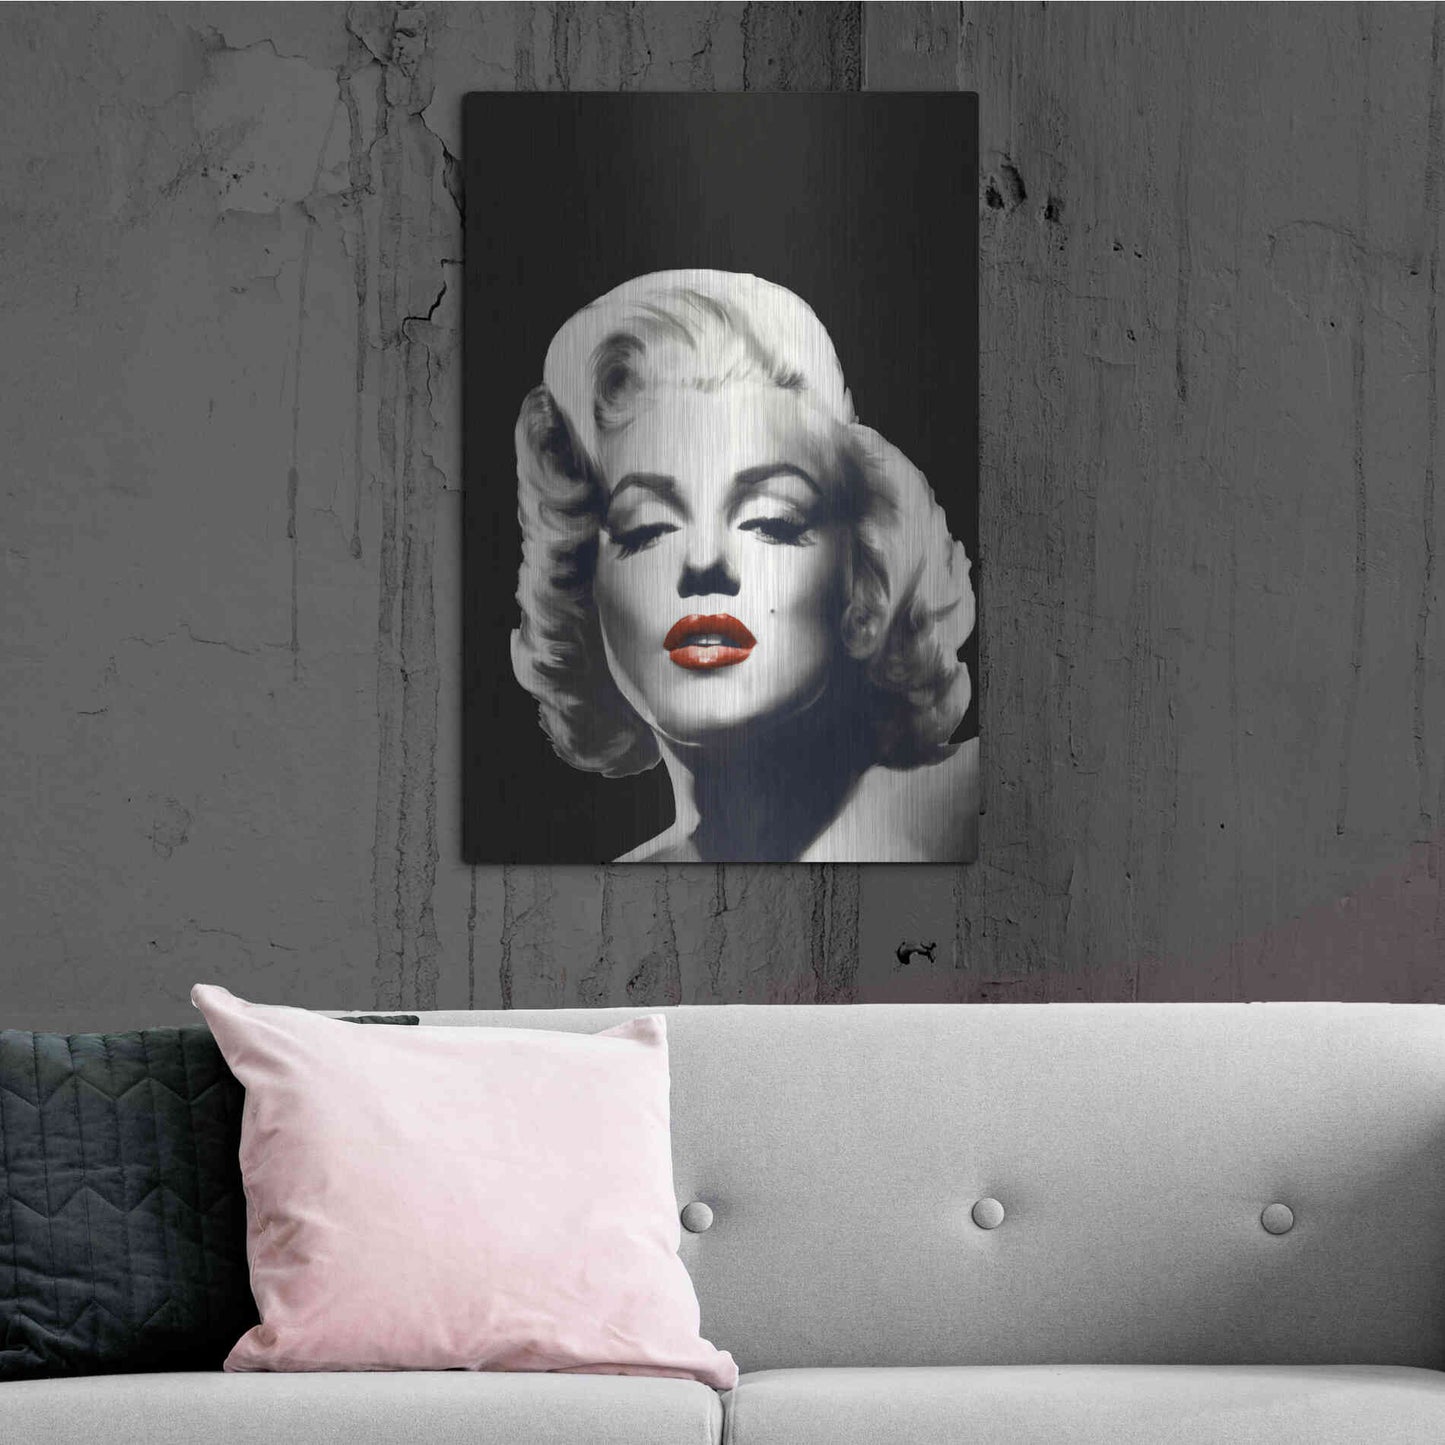 Luxe Metal Art 'Red Lips Marilyn In Black' by Chris Consani, Metal Wall Art,24x36